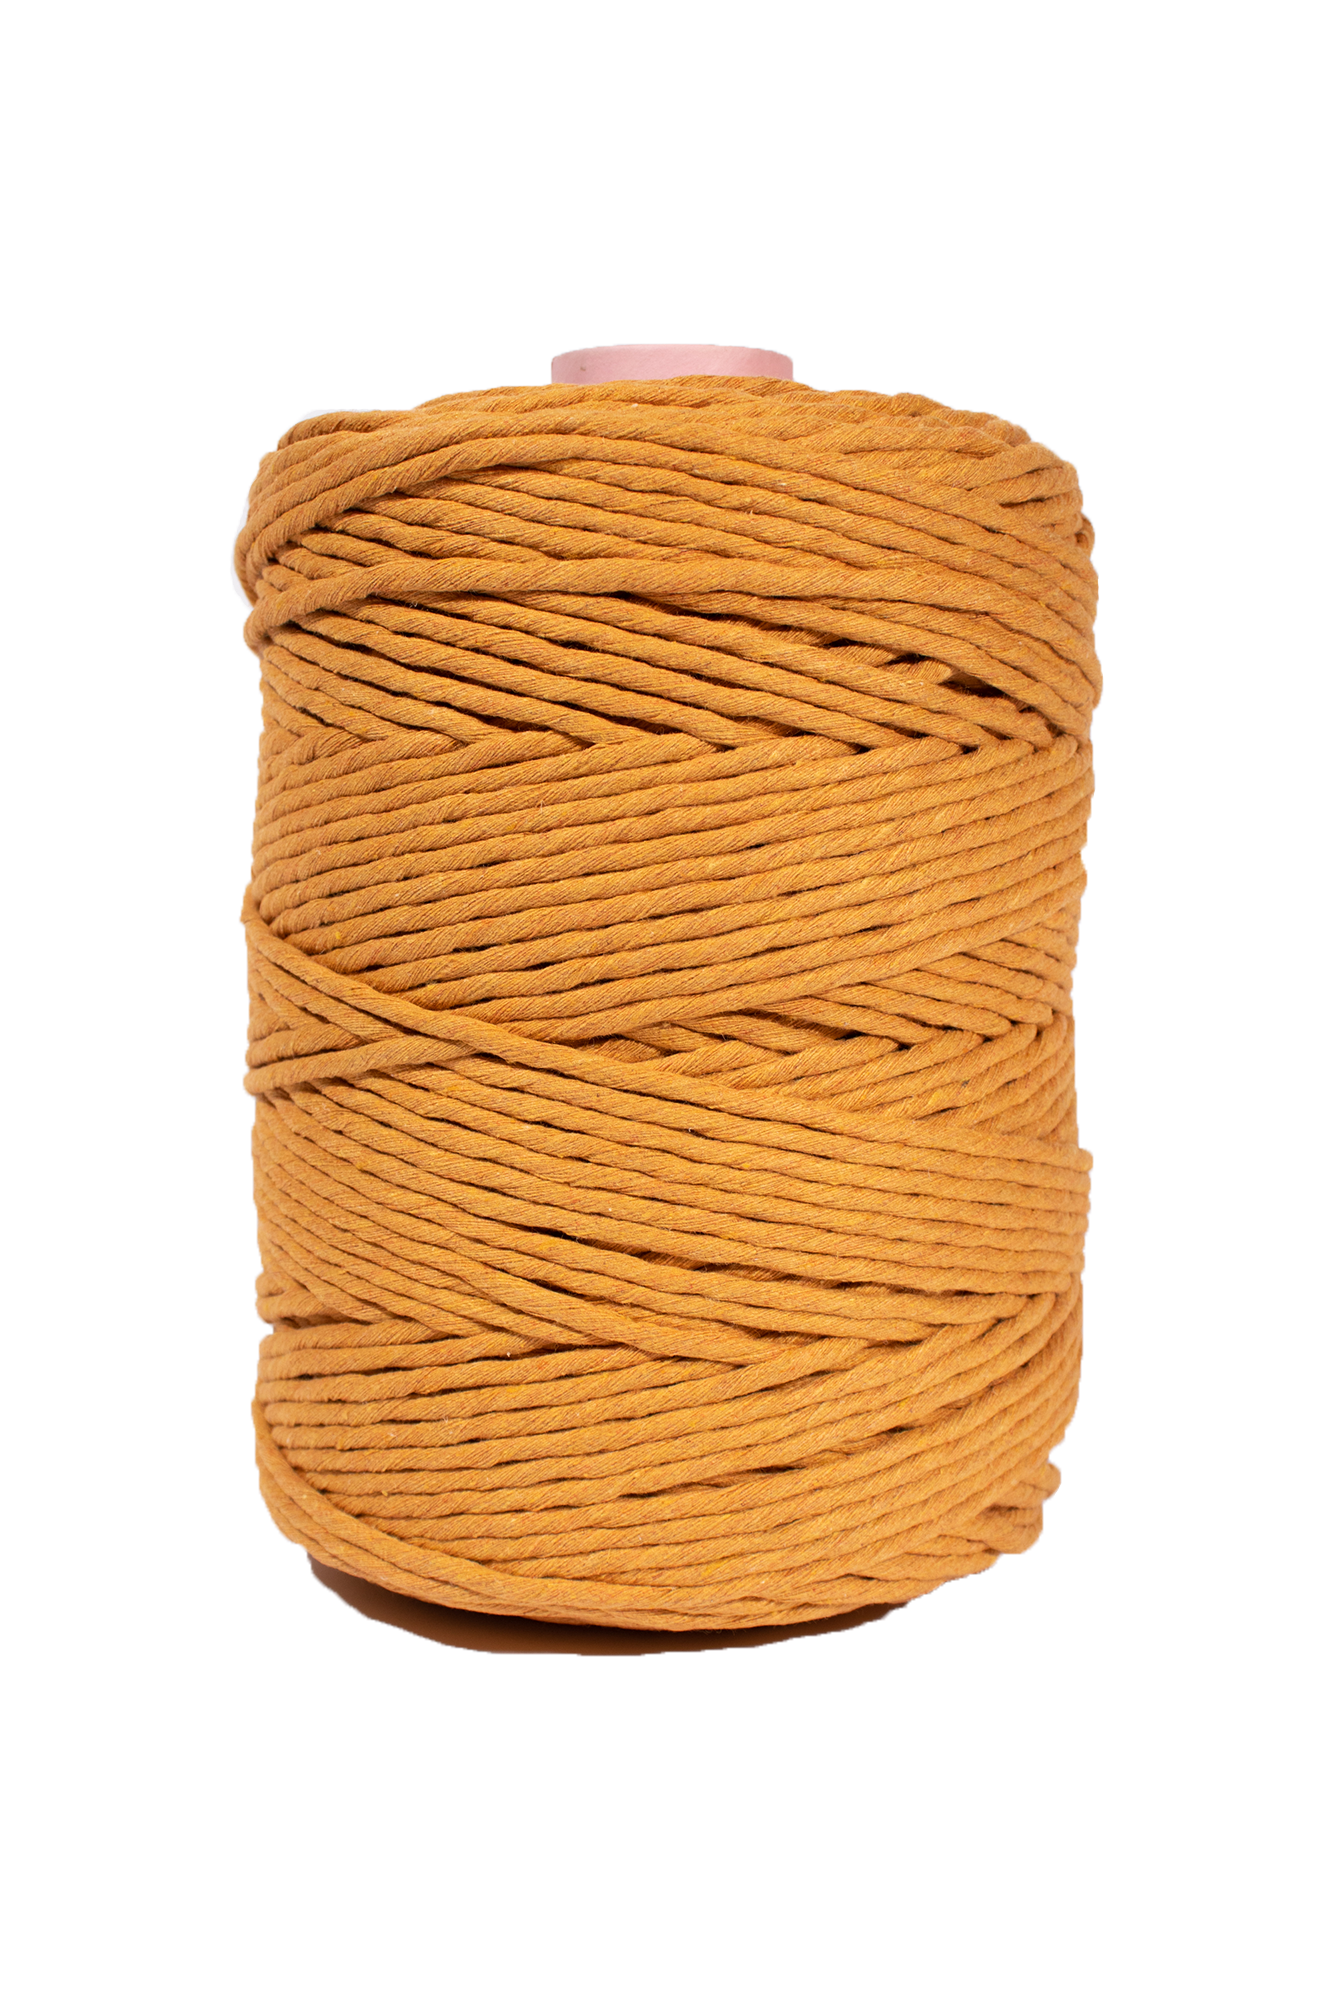 Crafts Long/100Yard Cord Macrame Rope Cotton 100m String Home Textiles  Circular Knitting Needles Interchangeable Circular Knitting Needles Size 8